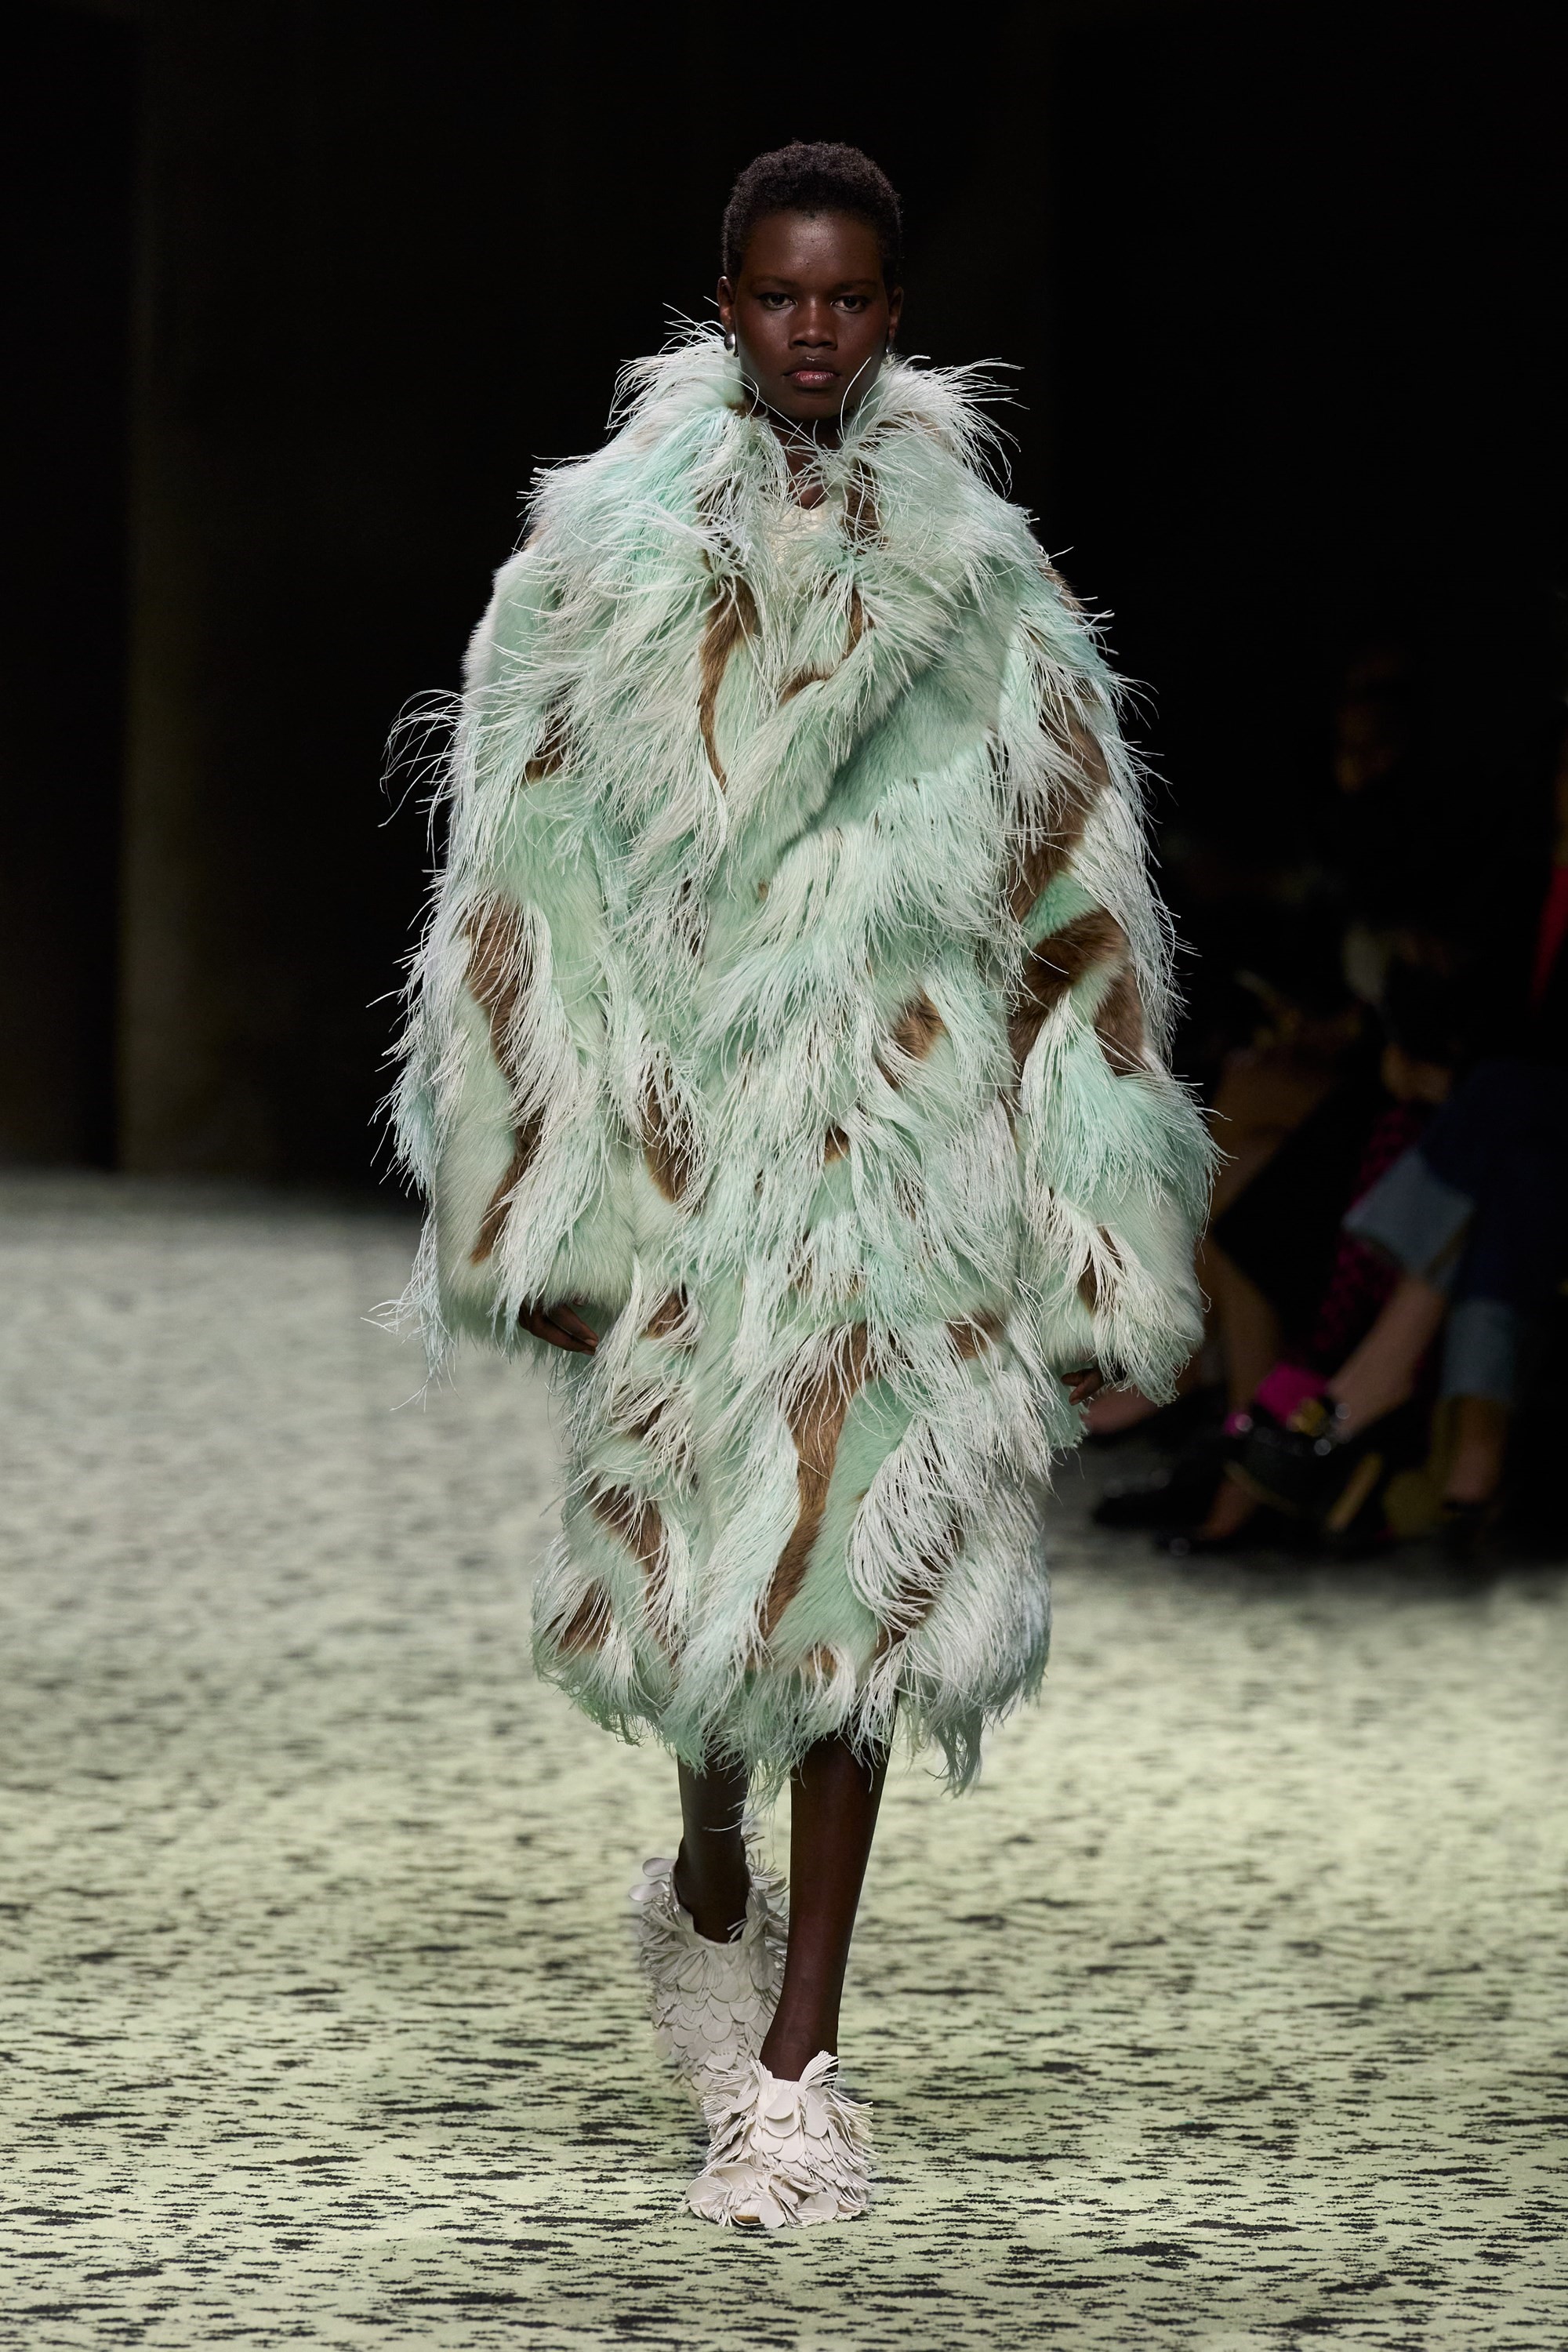 Bottega Veneta Presents Clothes To Live In at Milan Fashion Week